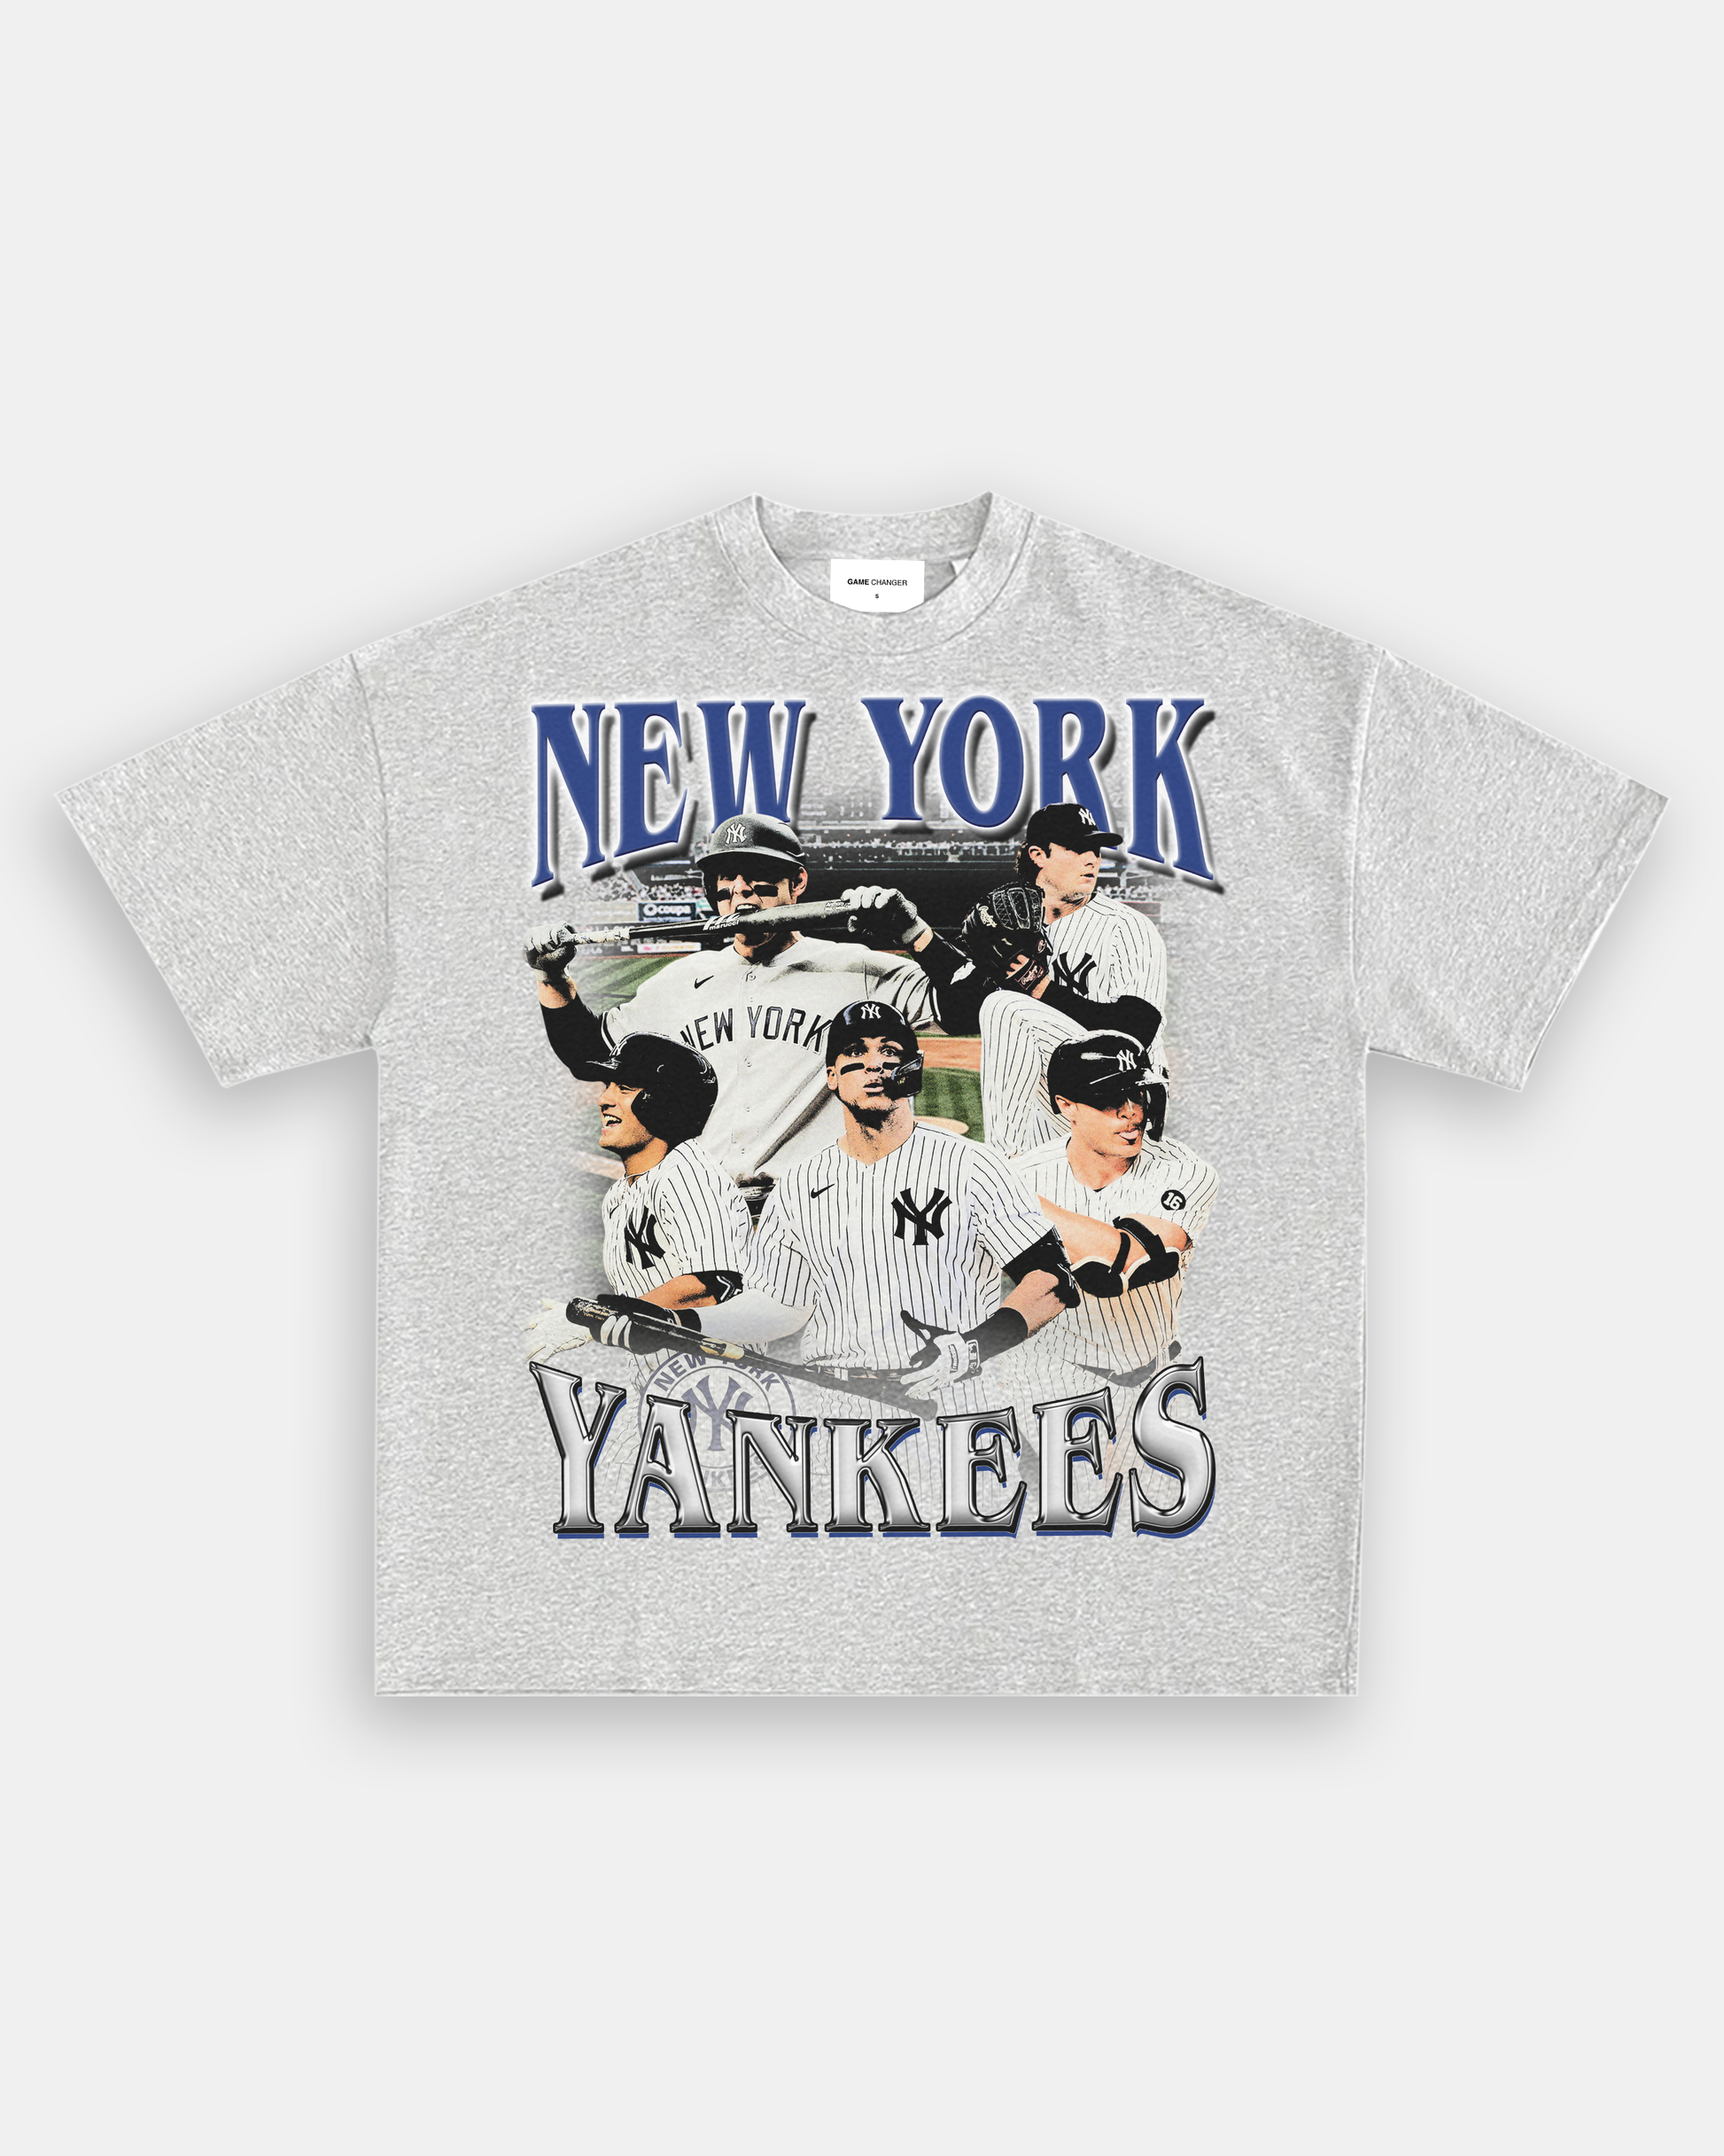 New York Yankees Merchandise, Yankees Apparel, Jerseys & Gear